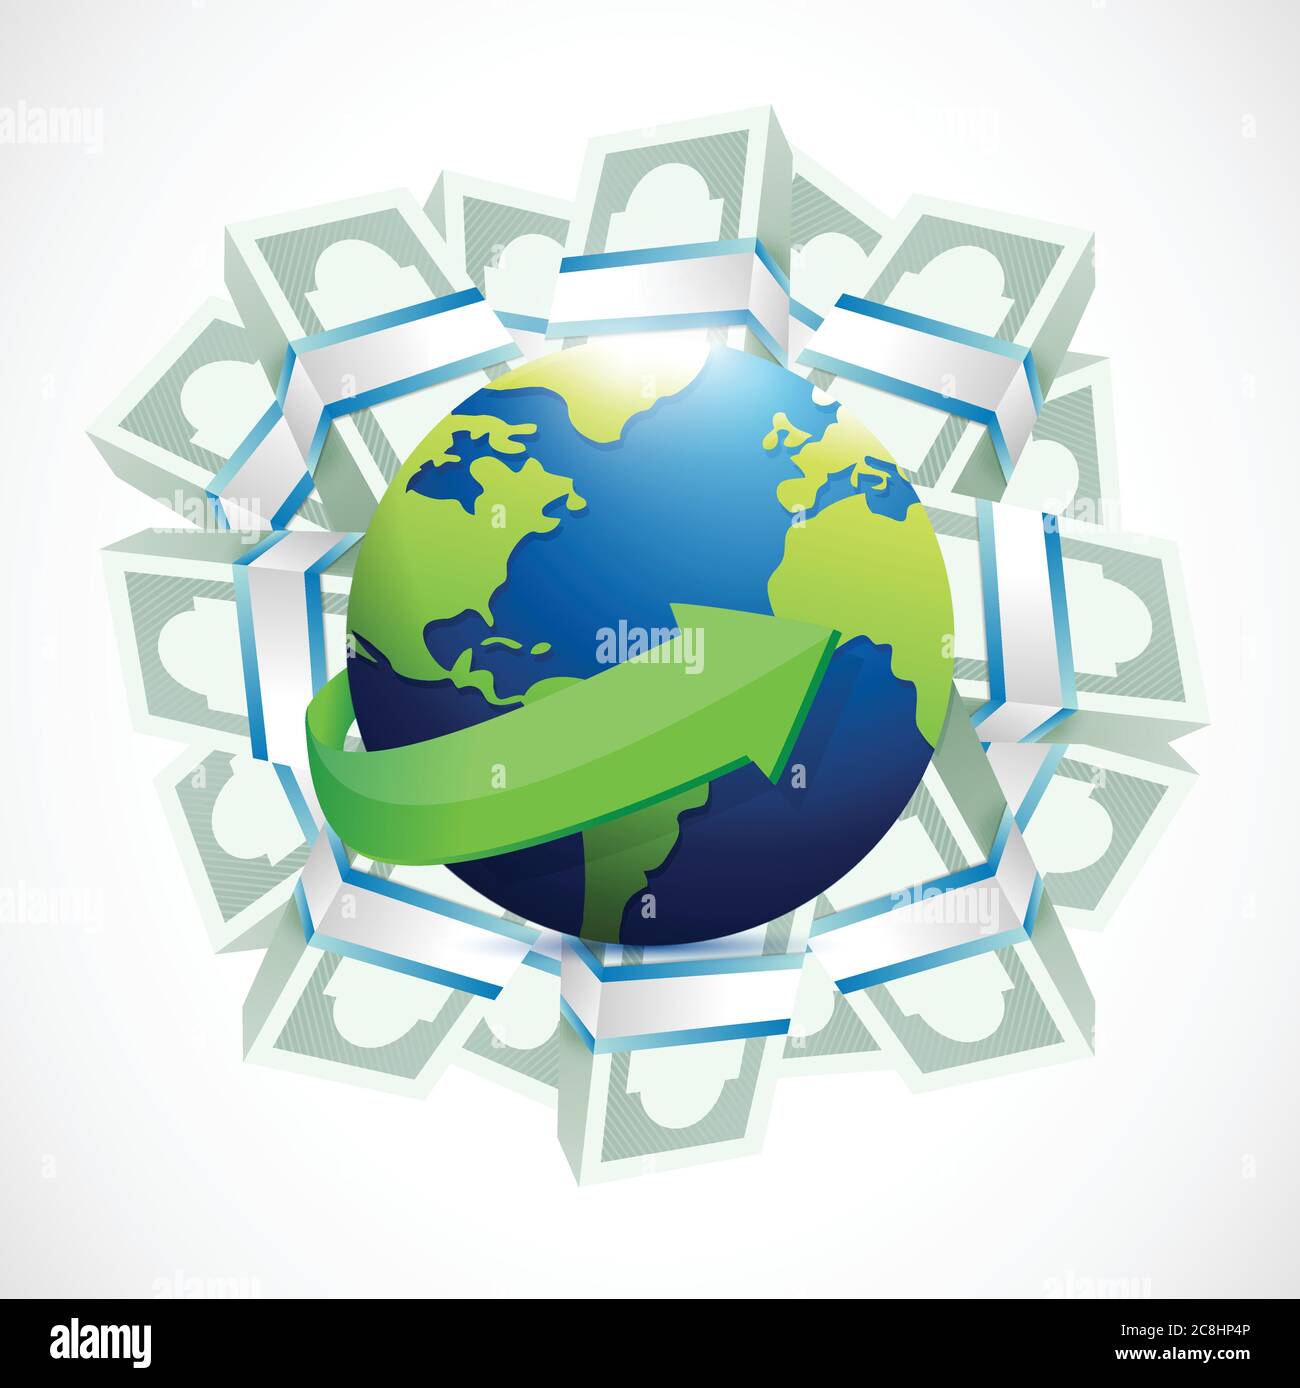 Money around a globe. illustration design over a white background Stock Vector